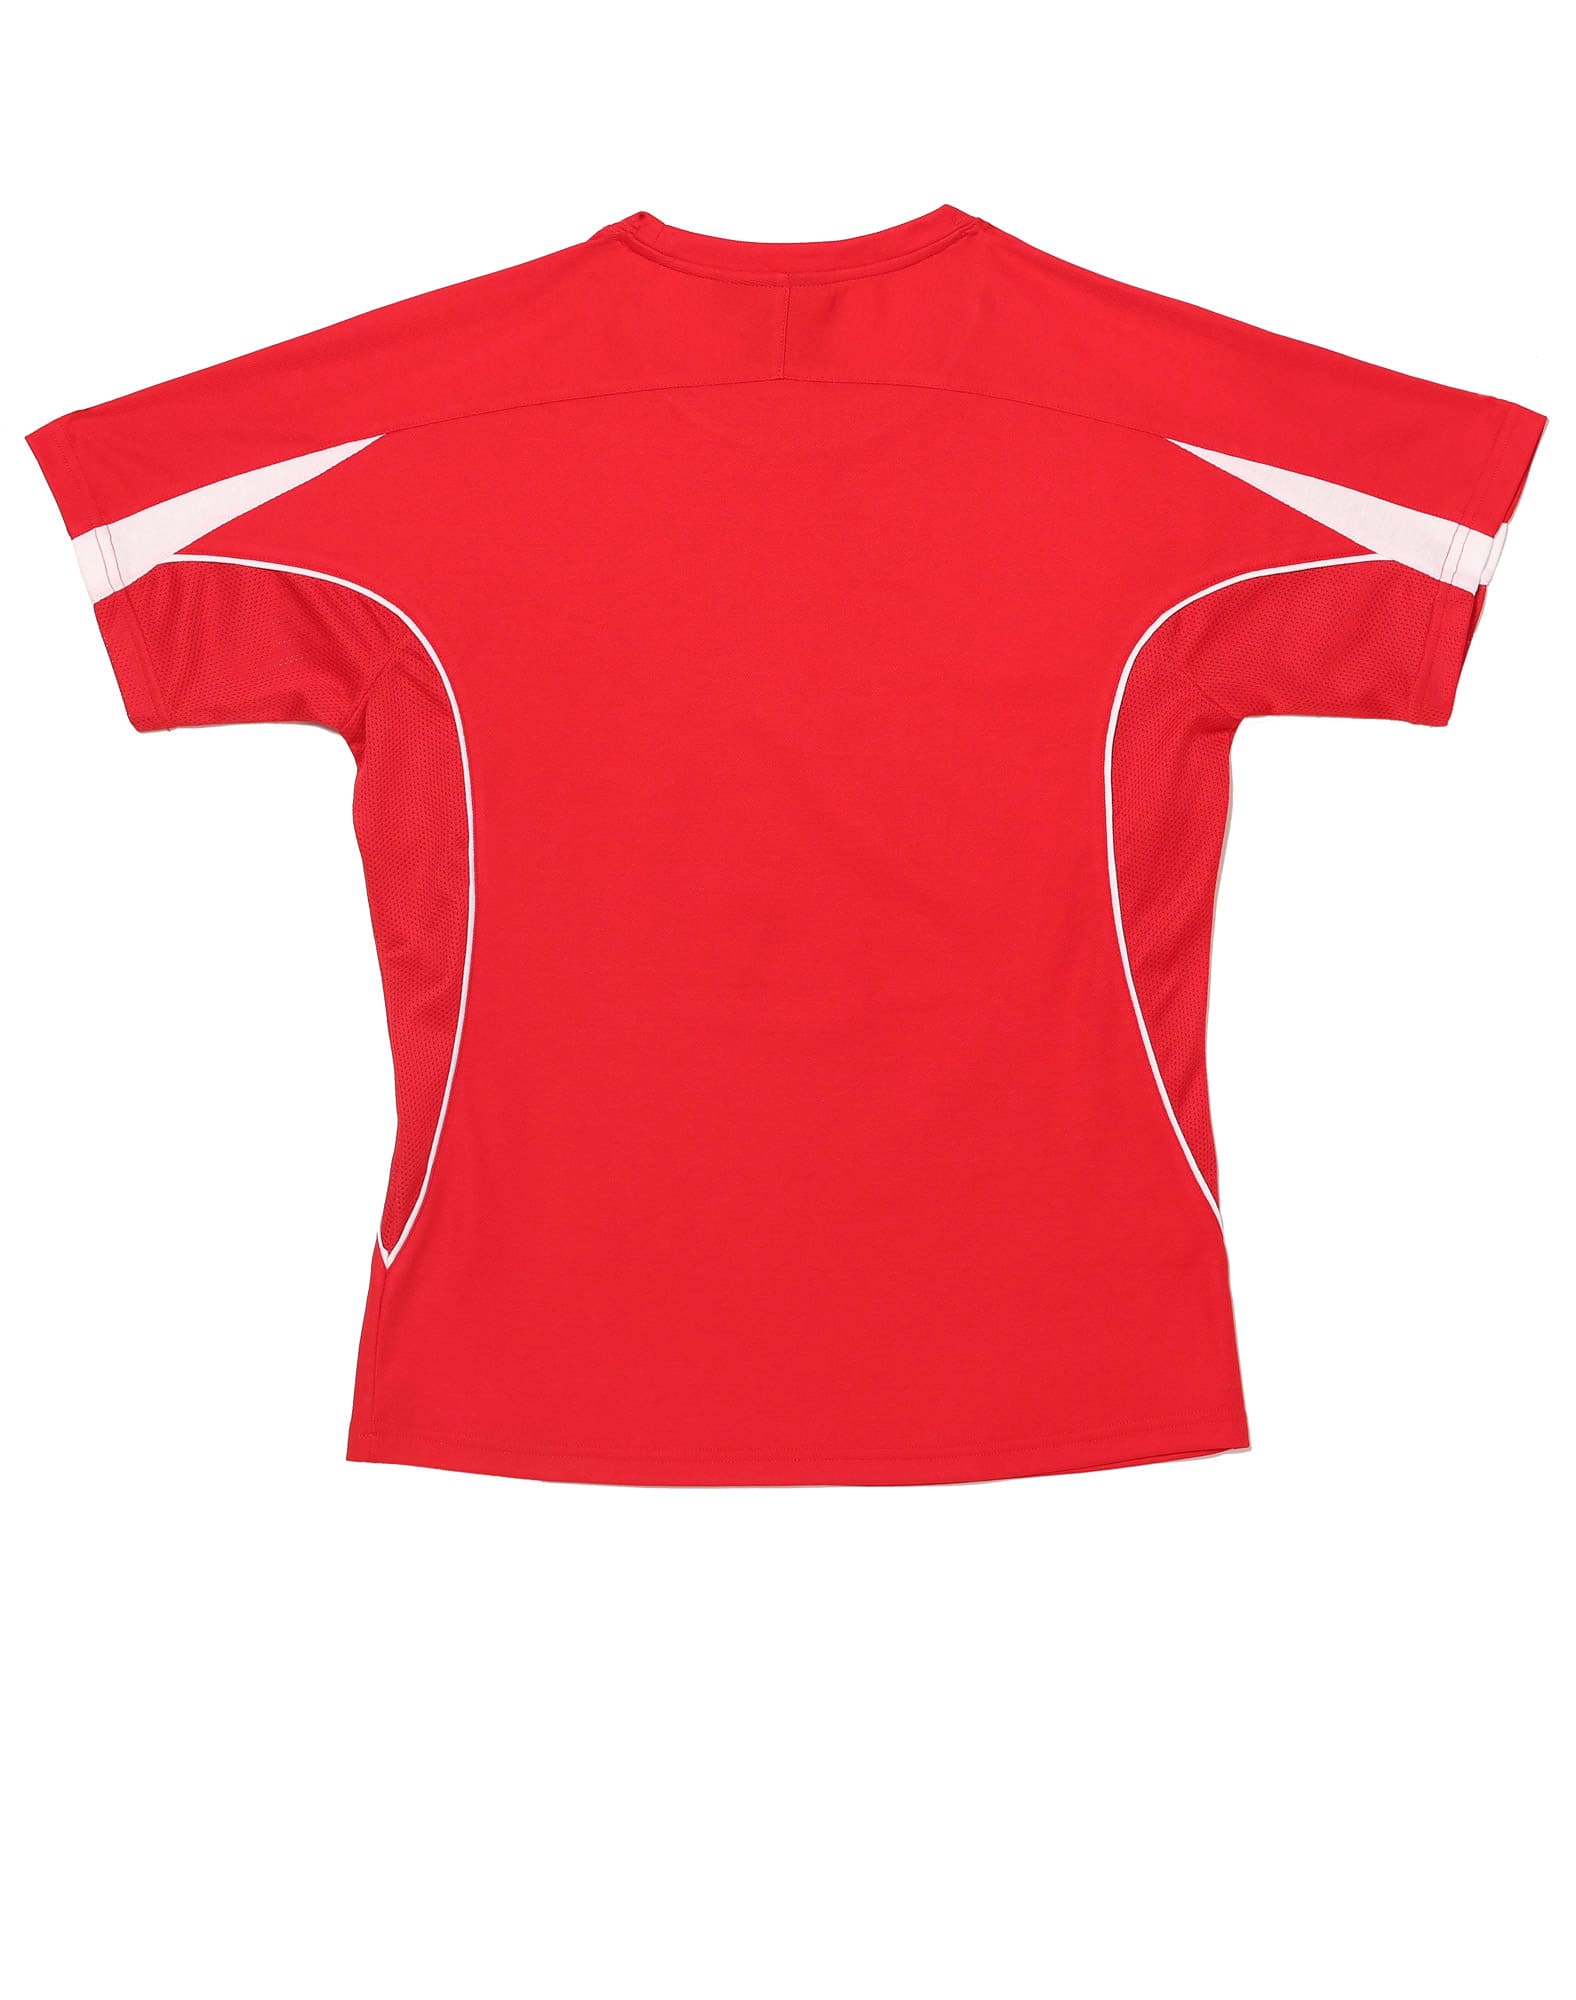 Custom Made (Black Red) Legend Ladies Short Sleeve Tee Shirts Online in Perth